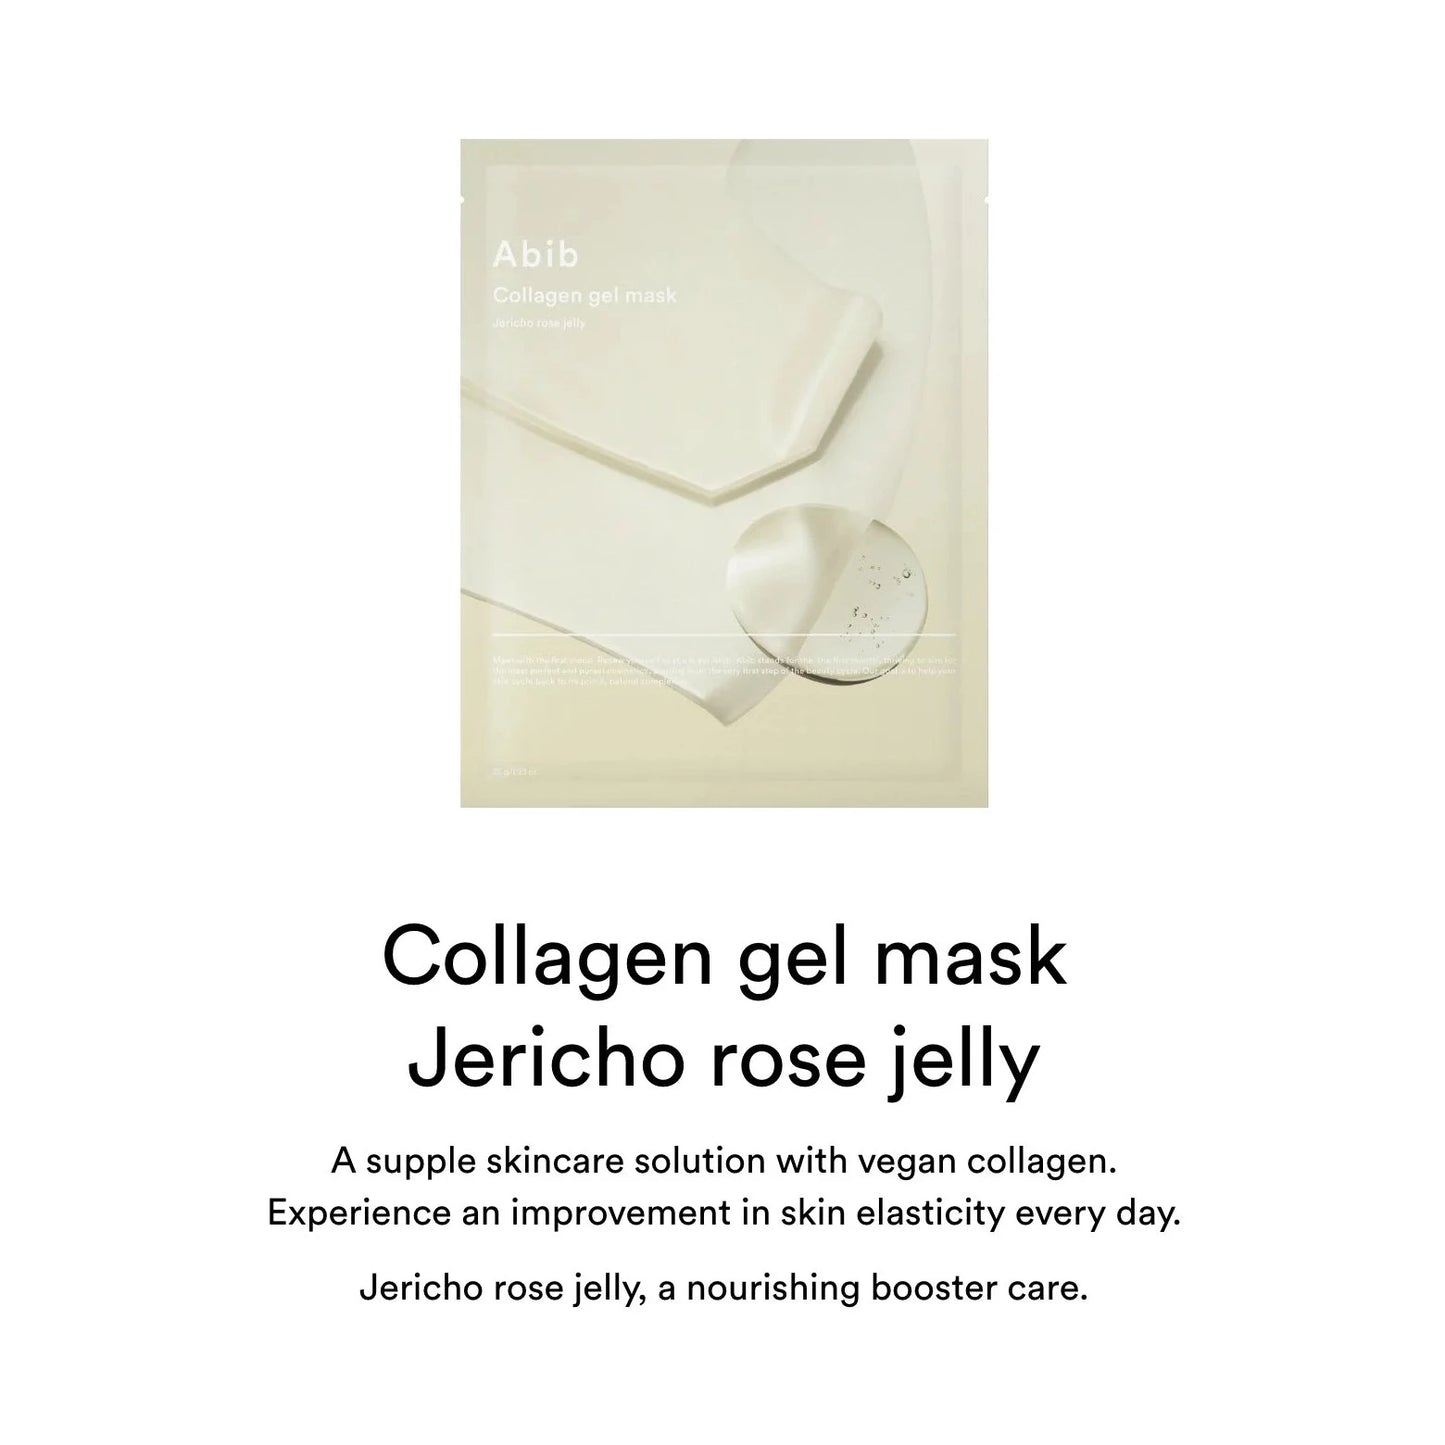 Abib Collagen Gel Mask Jericho Jelly Rose 35g